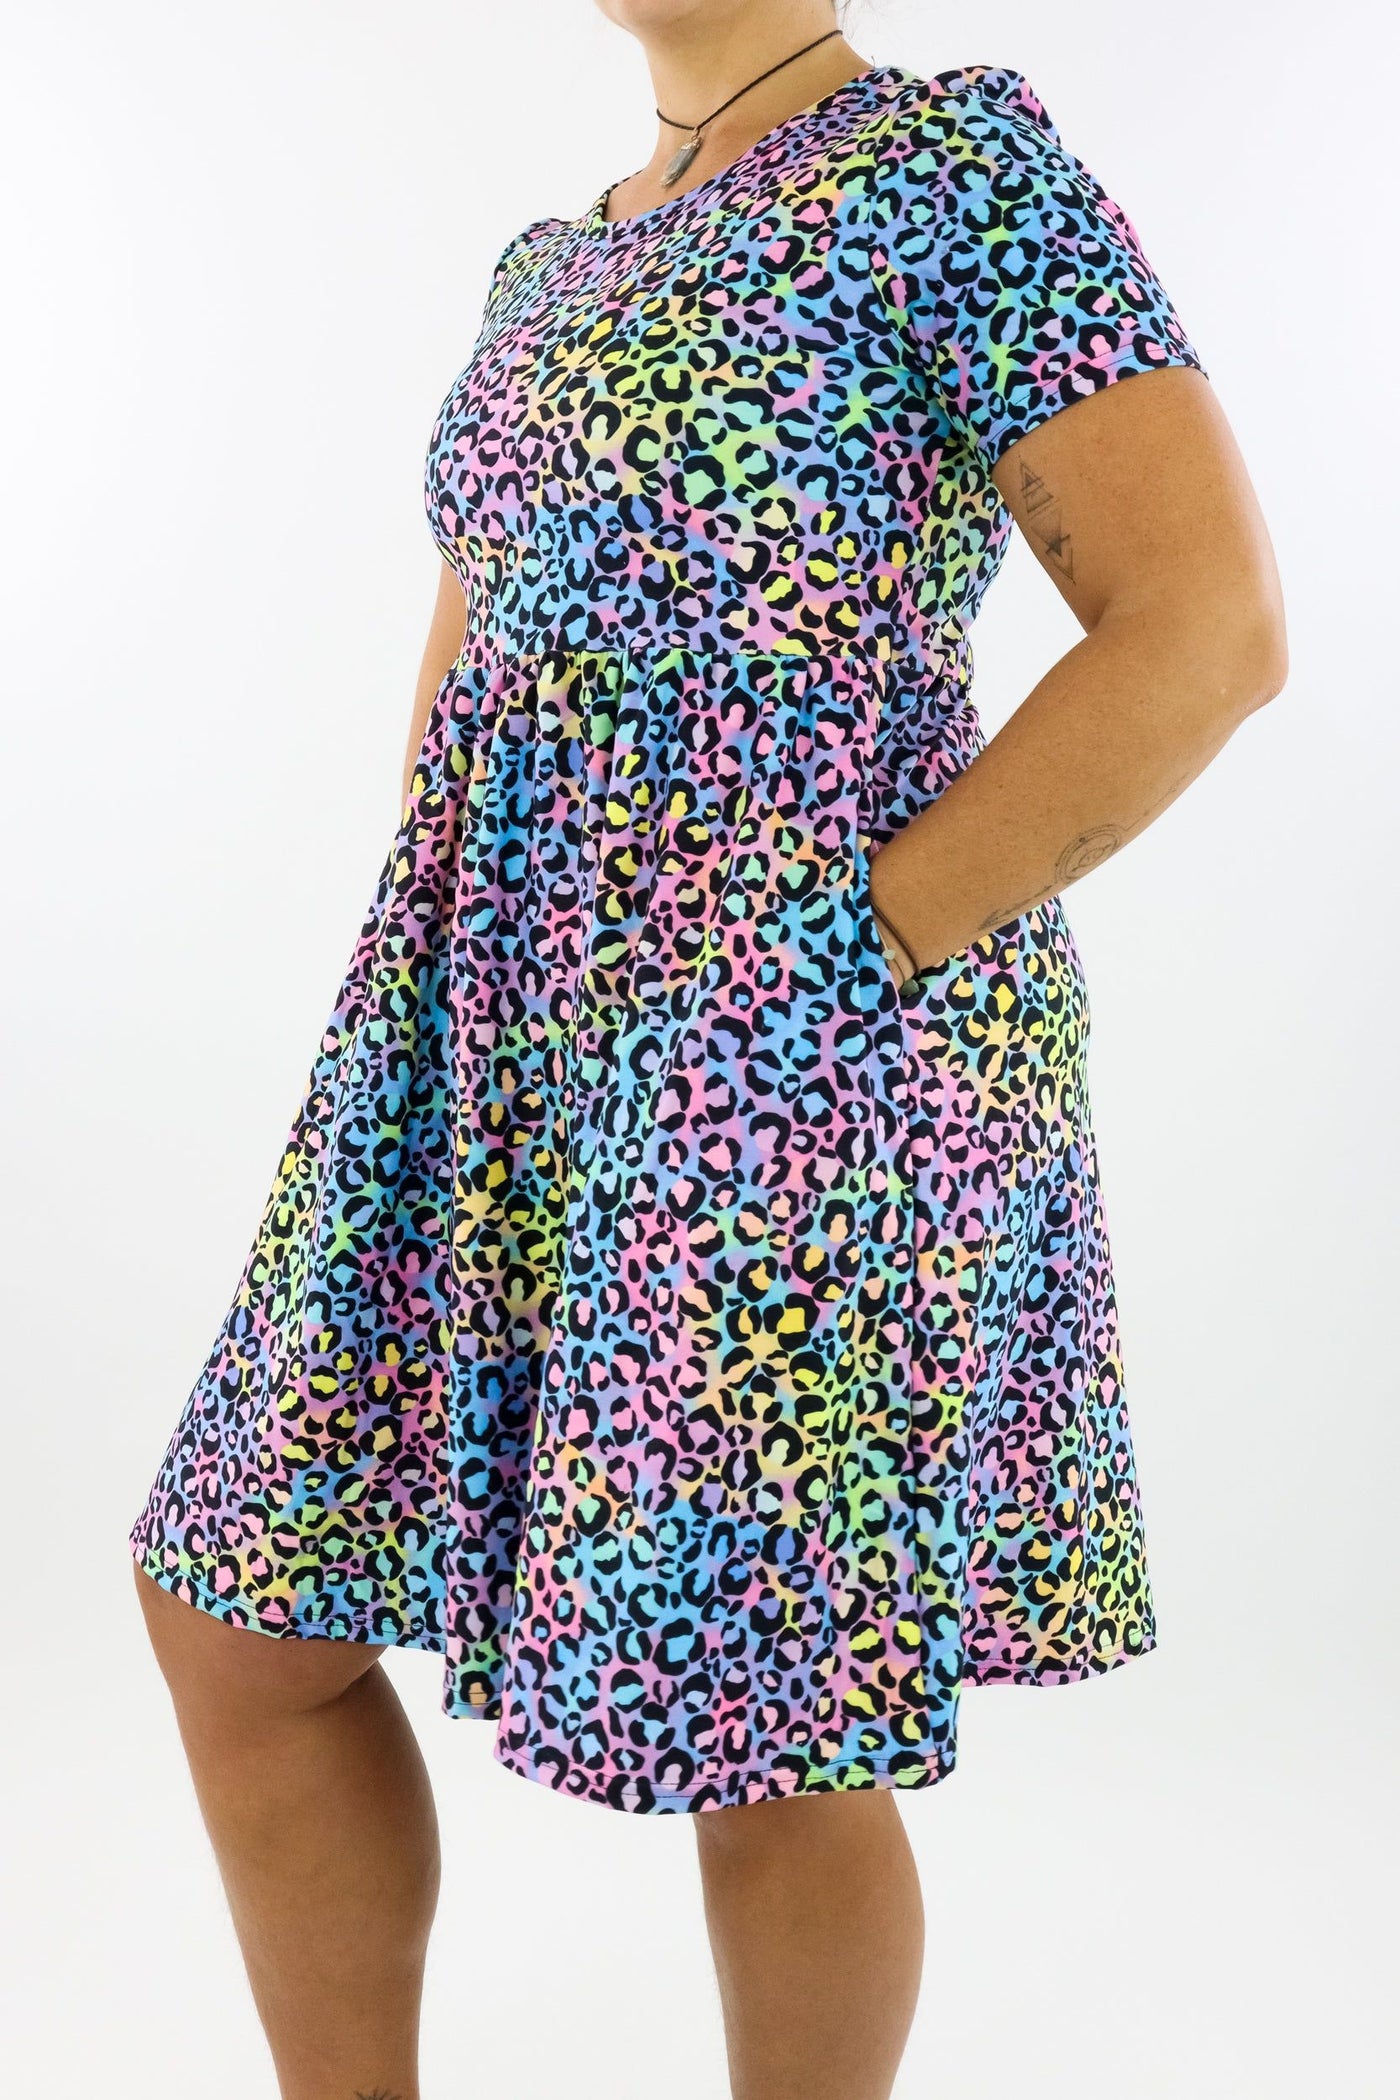 Vivid Leopard - Short Sleeve Skater Dress - Knee Length - Side Pockets Knee Length Skater Dress Pawlie   